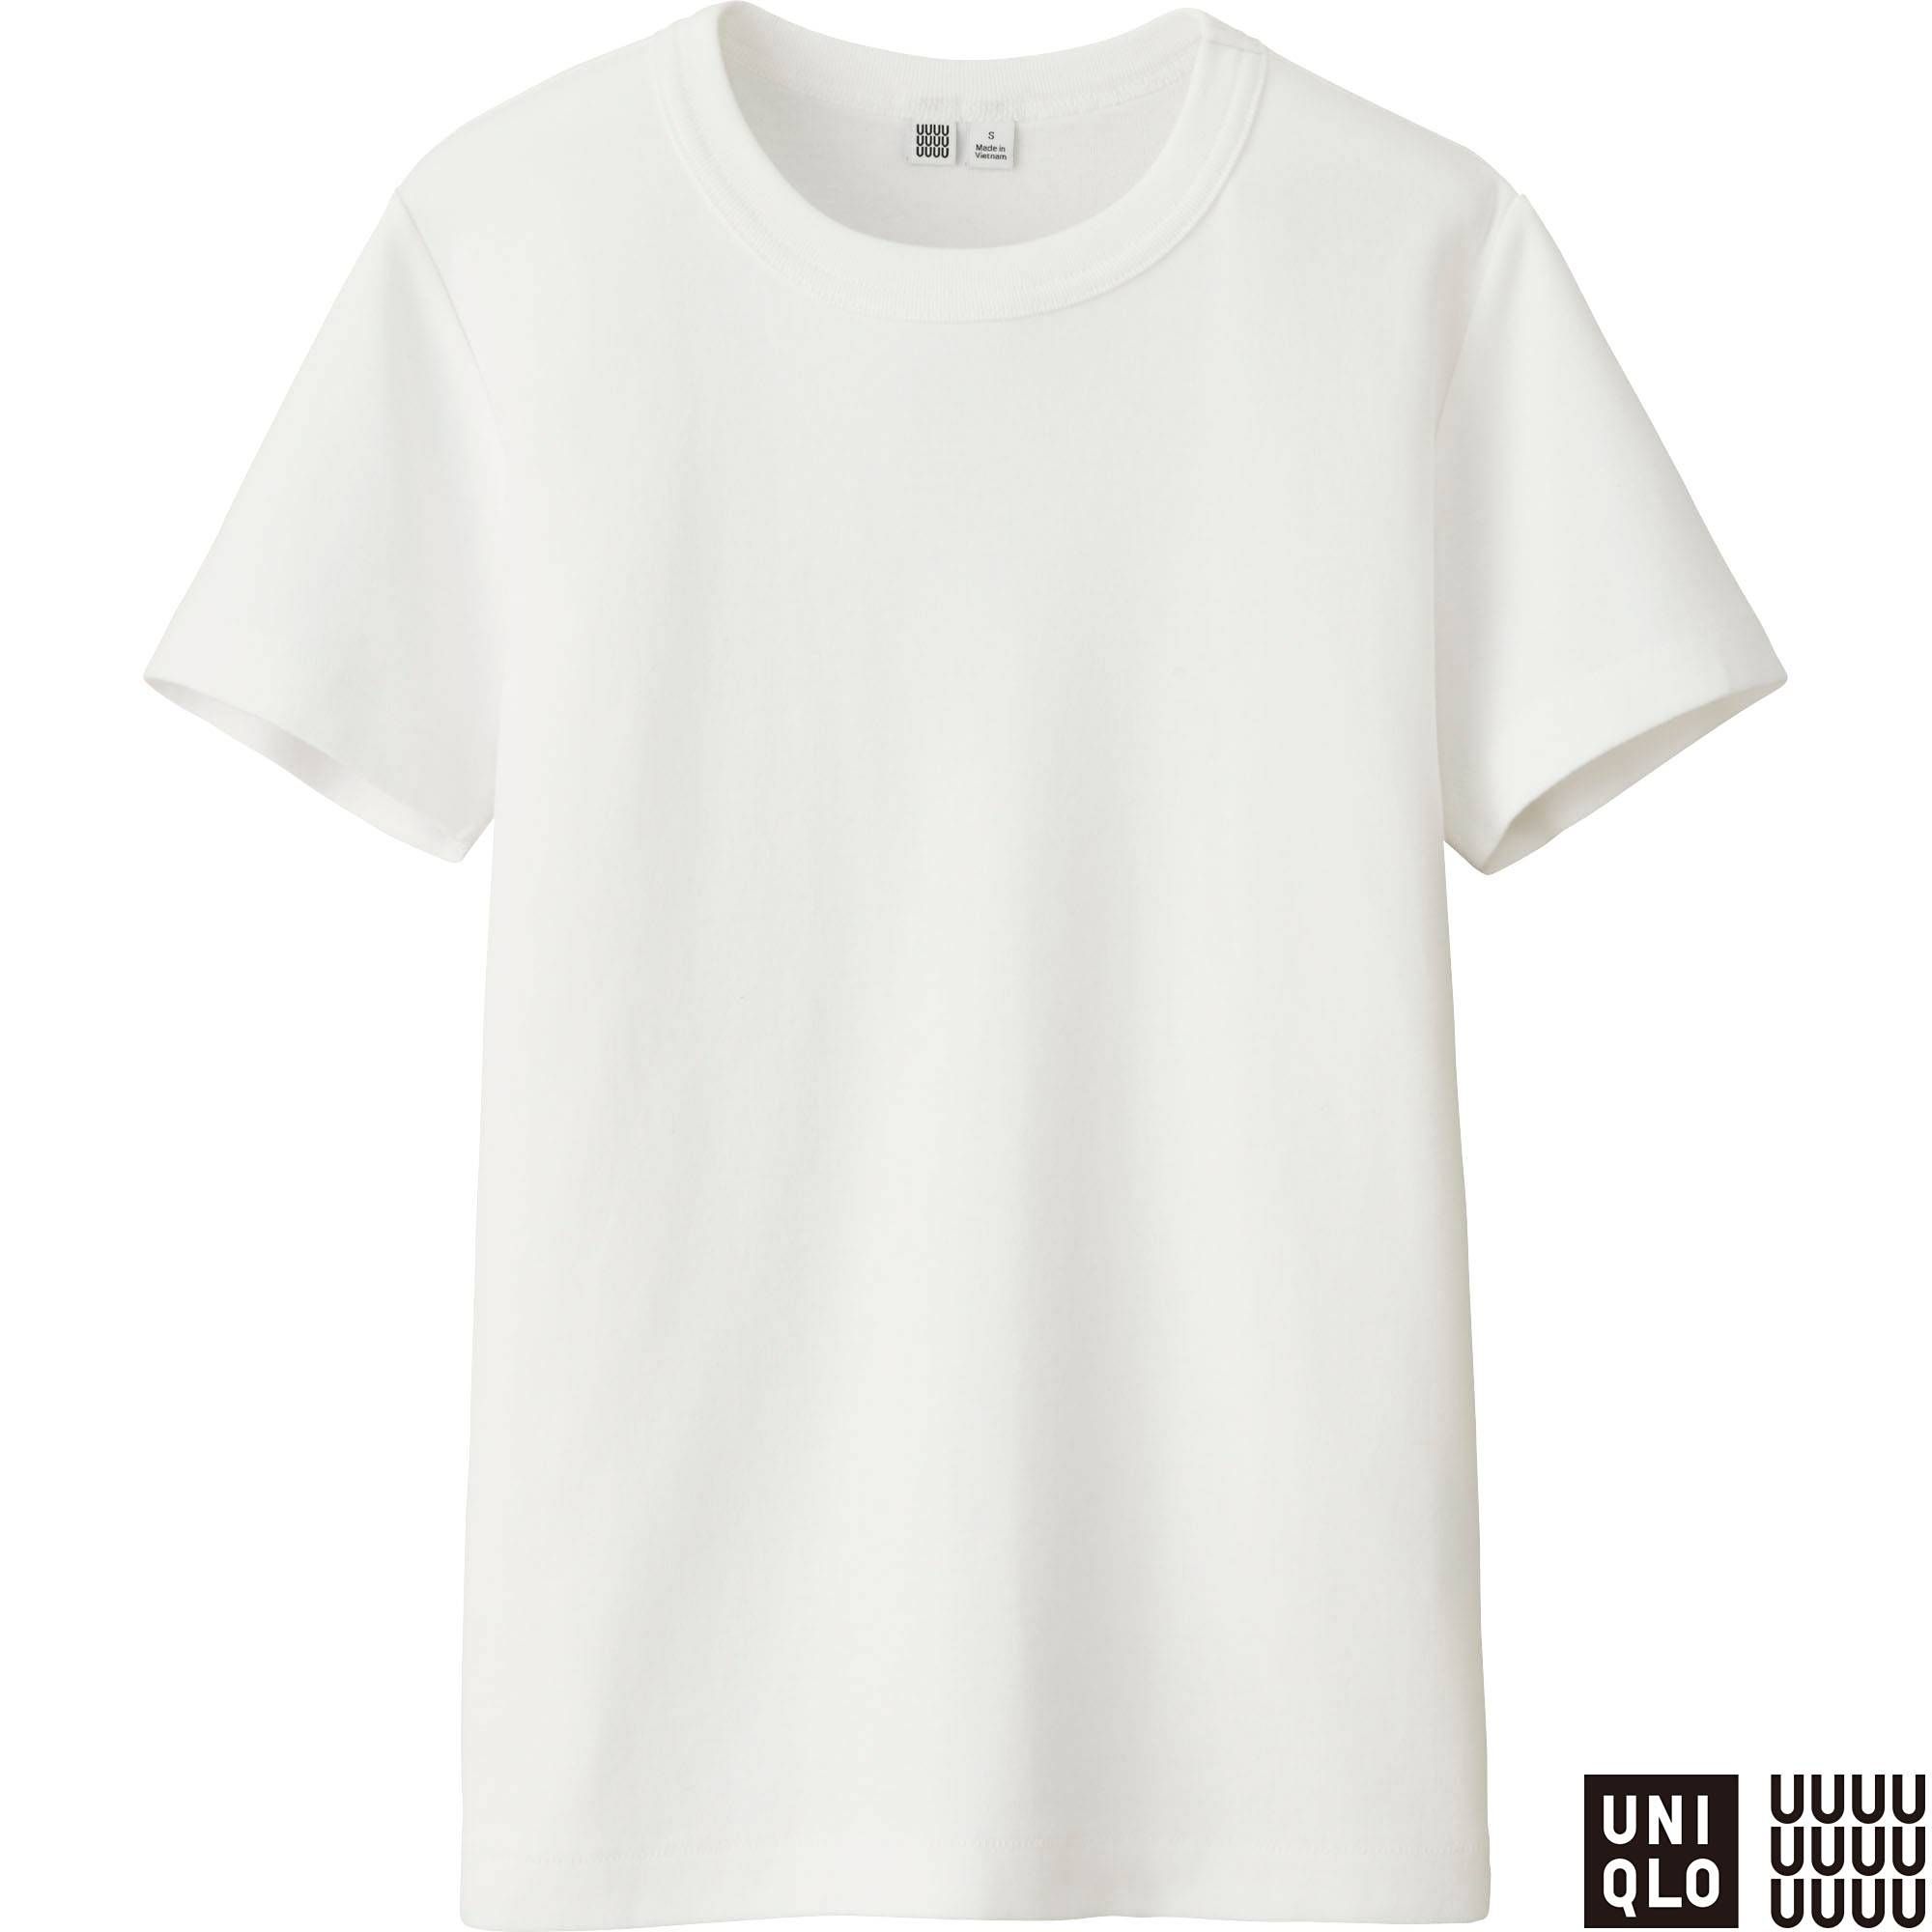 white t shirt best white t shirts- gap, reformation, everlane, hanes TOIMCVV